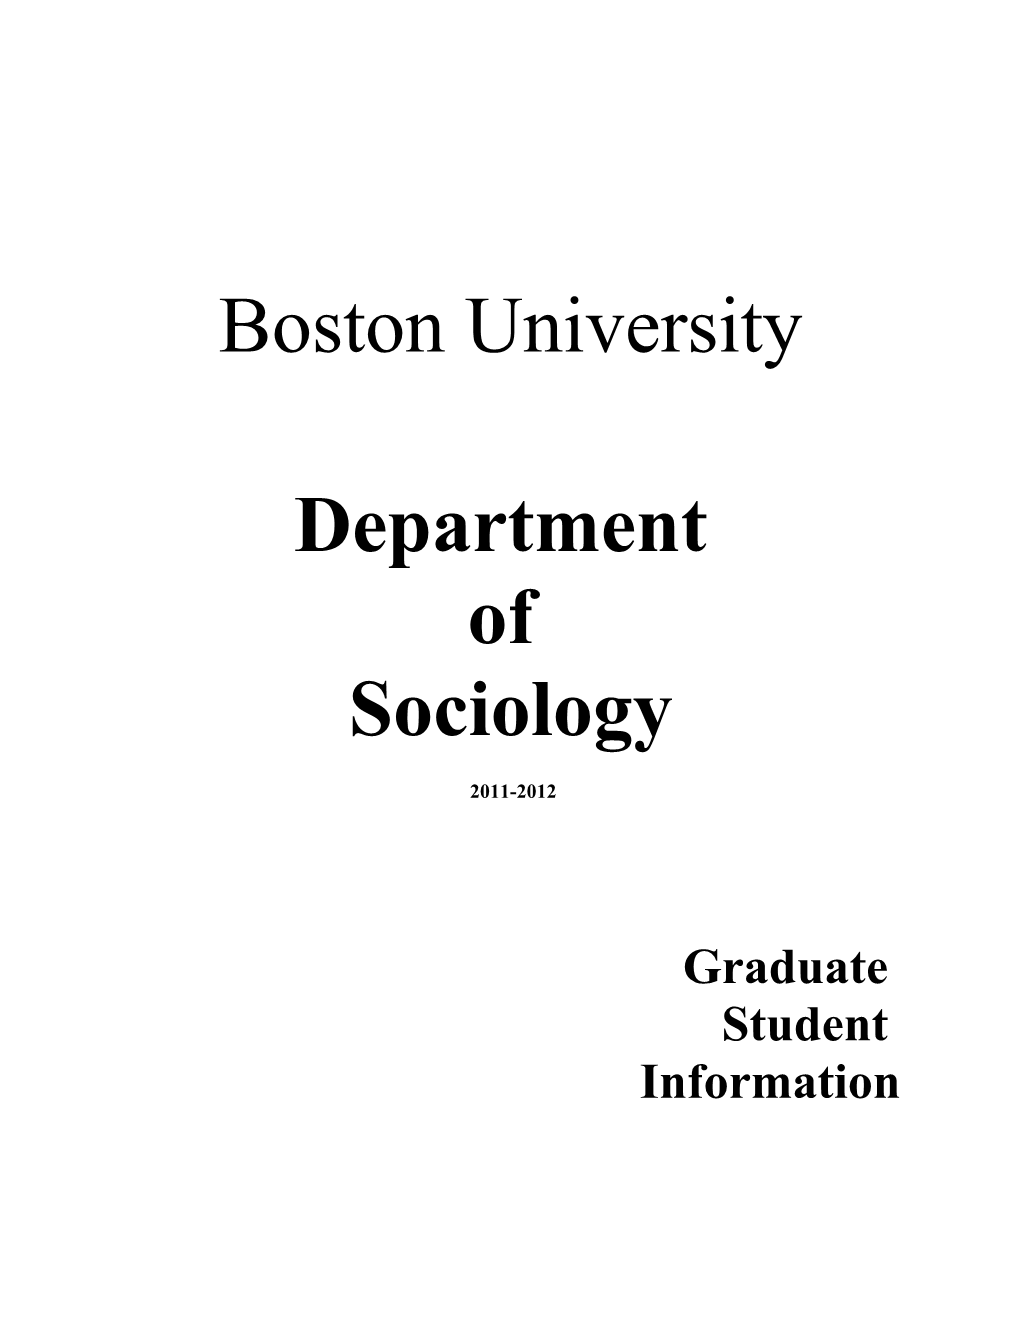 Graduate Programs in Sociology at Boston University